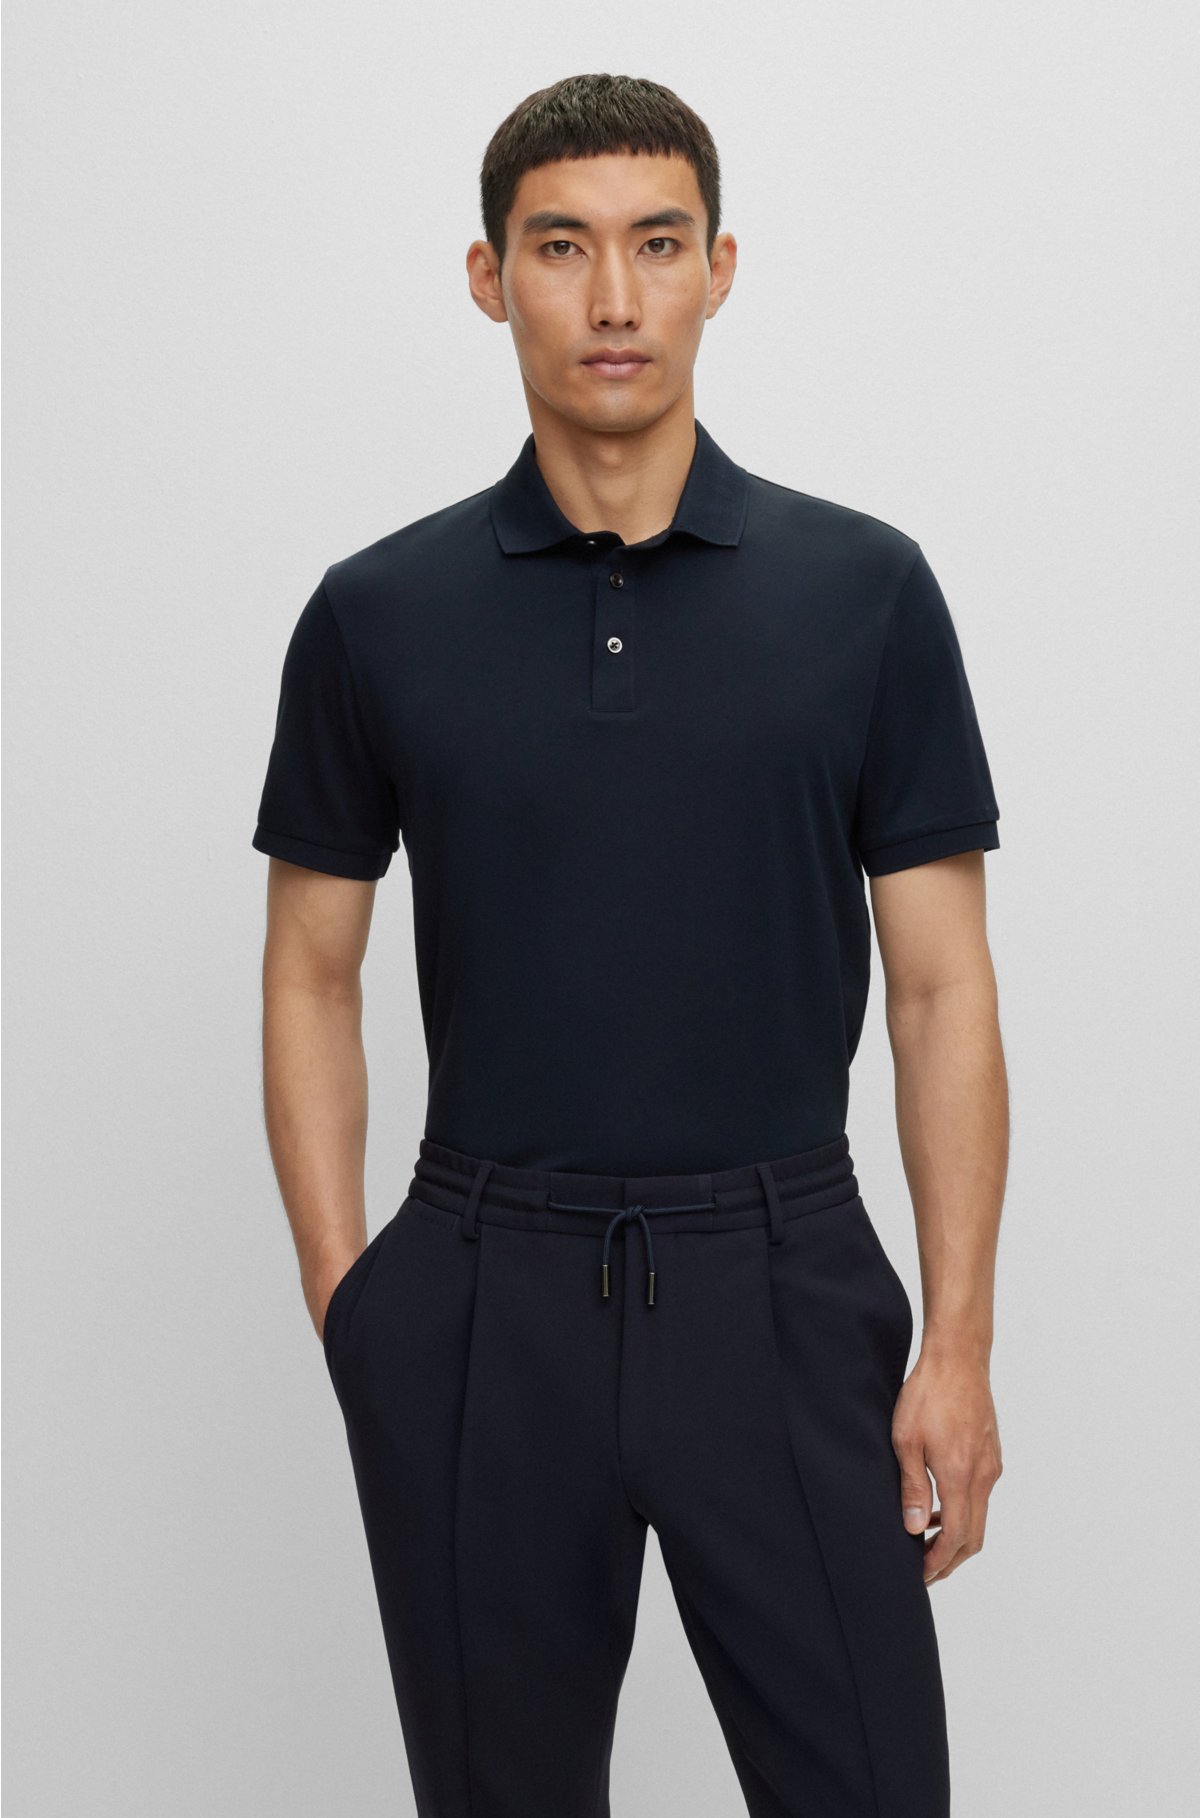 Zara Men's Knit Cotton Polo Shirt